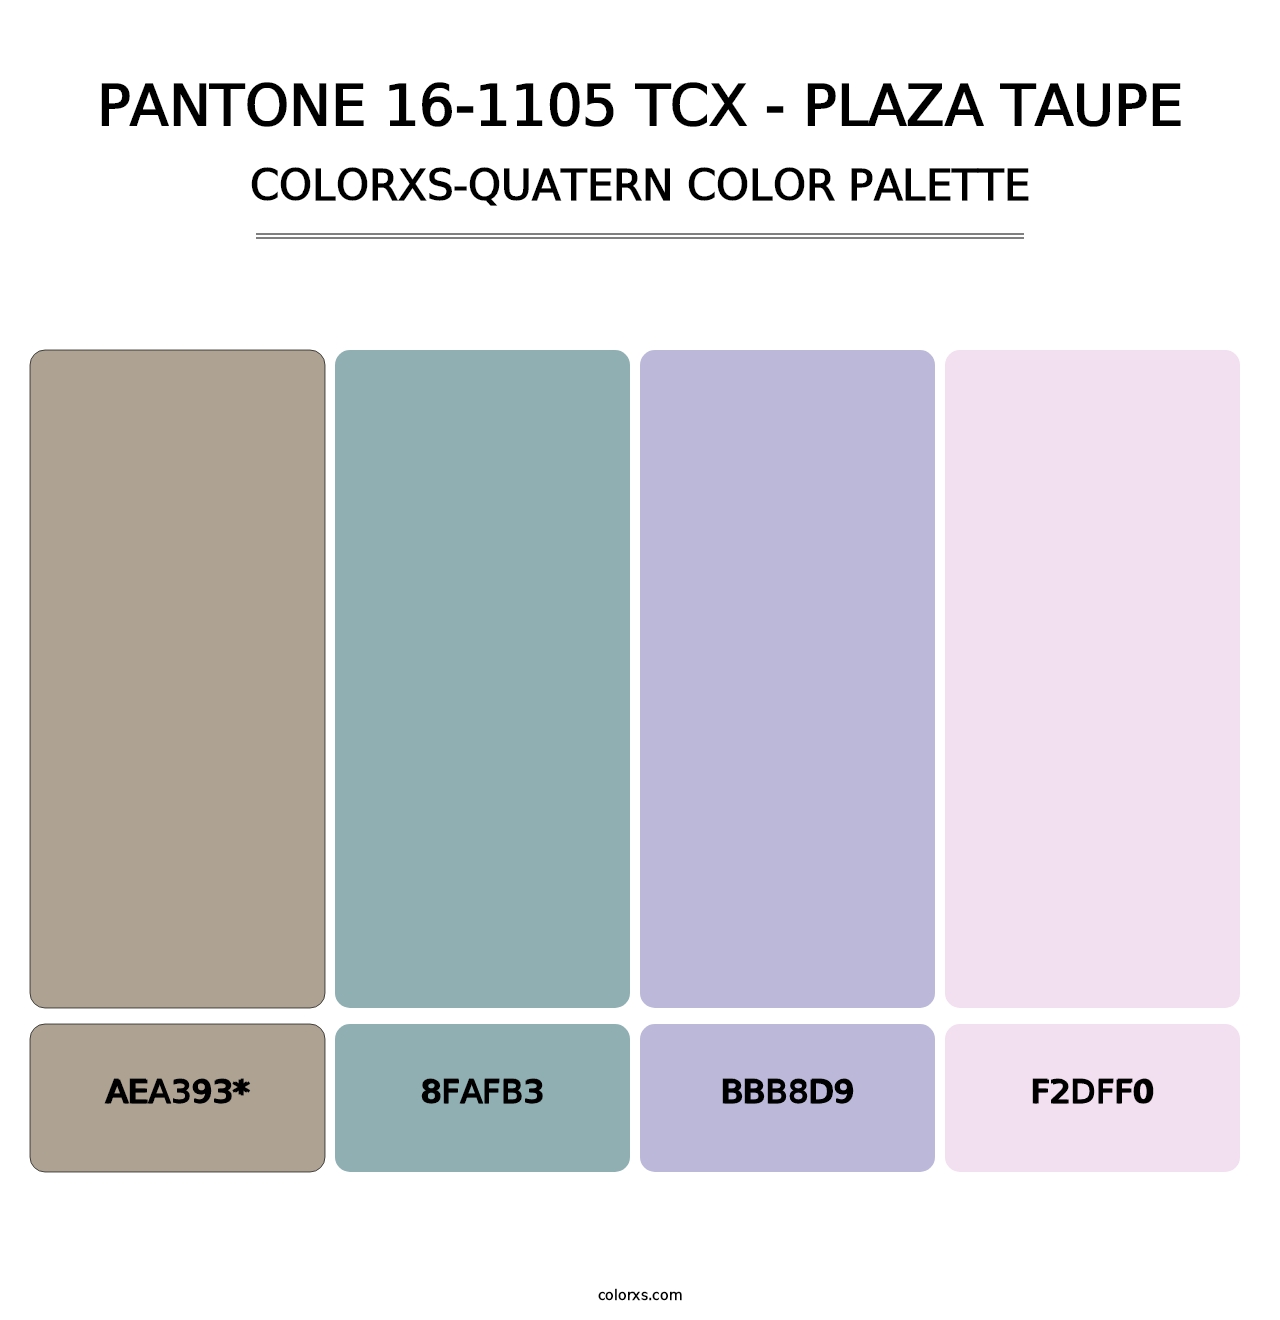 PANTONE 16-1105 TCX - Plaza Taupe - Colorxs Quatern Palette